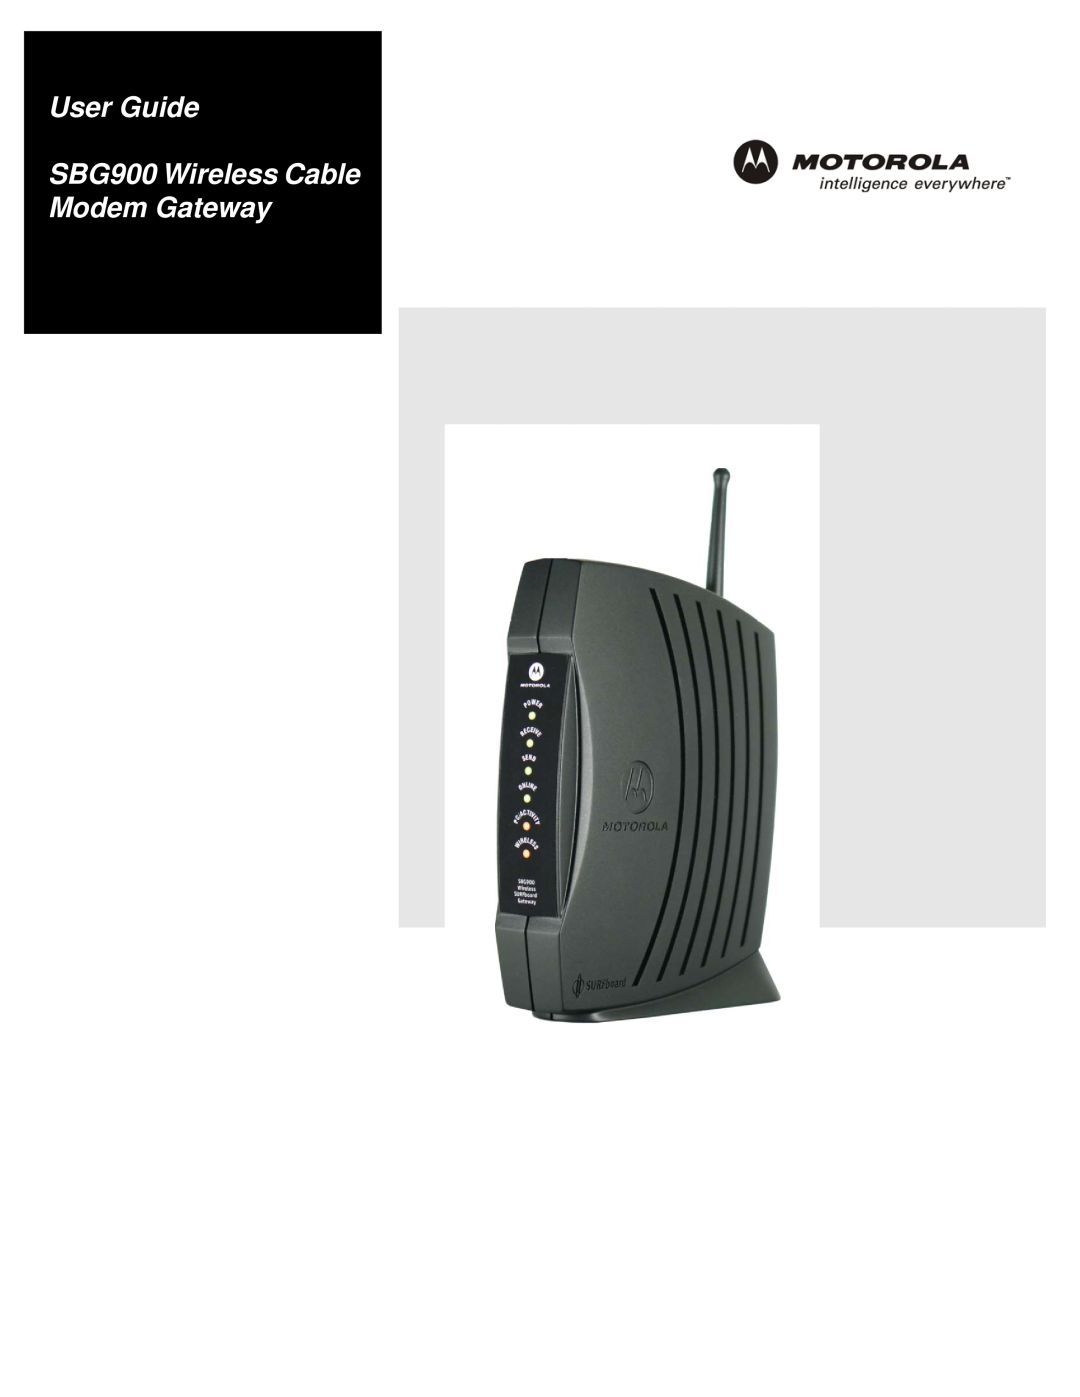 Motorola manual User Guide SBG900, Wireless Cable Modem Gateway 